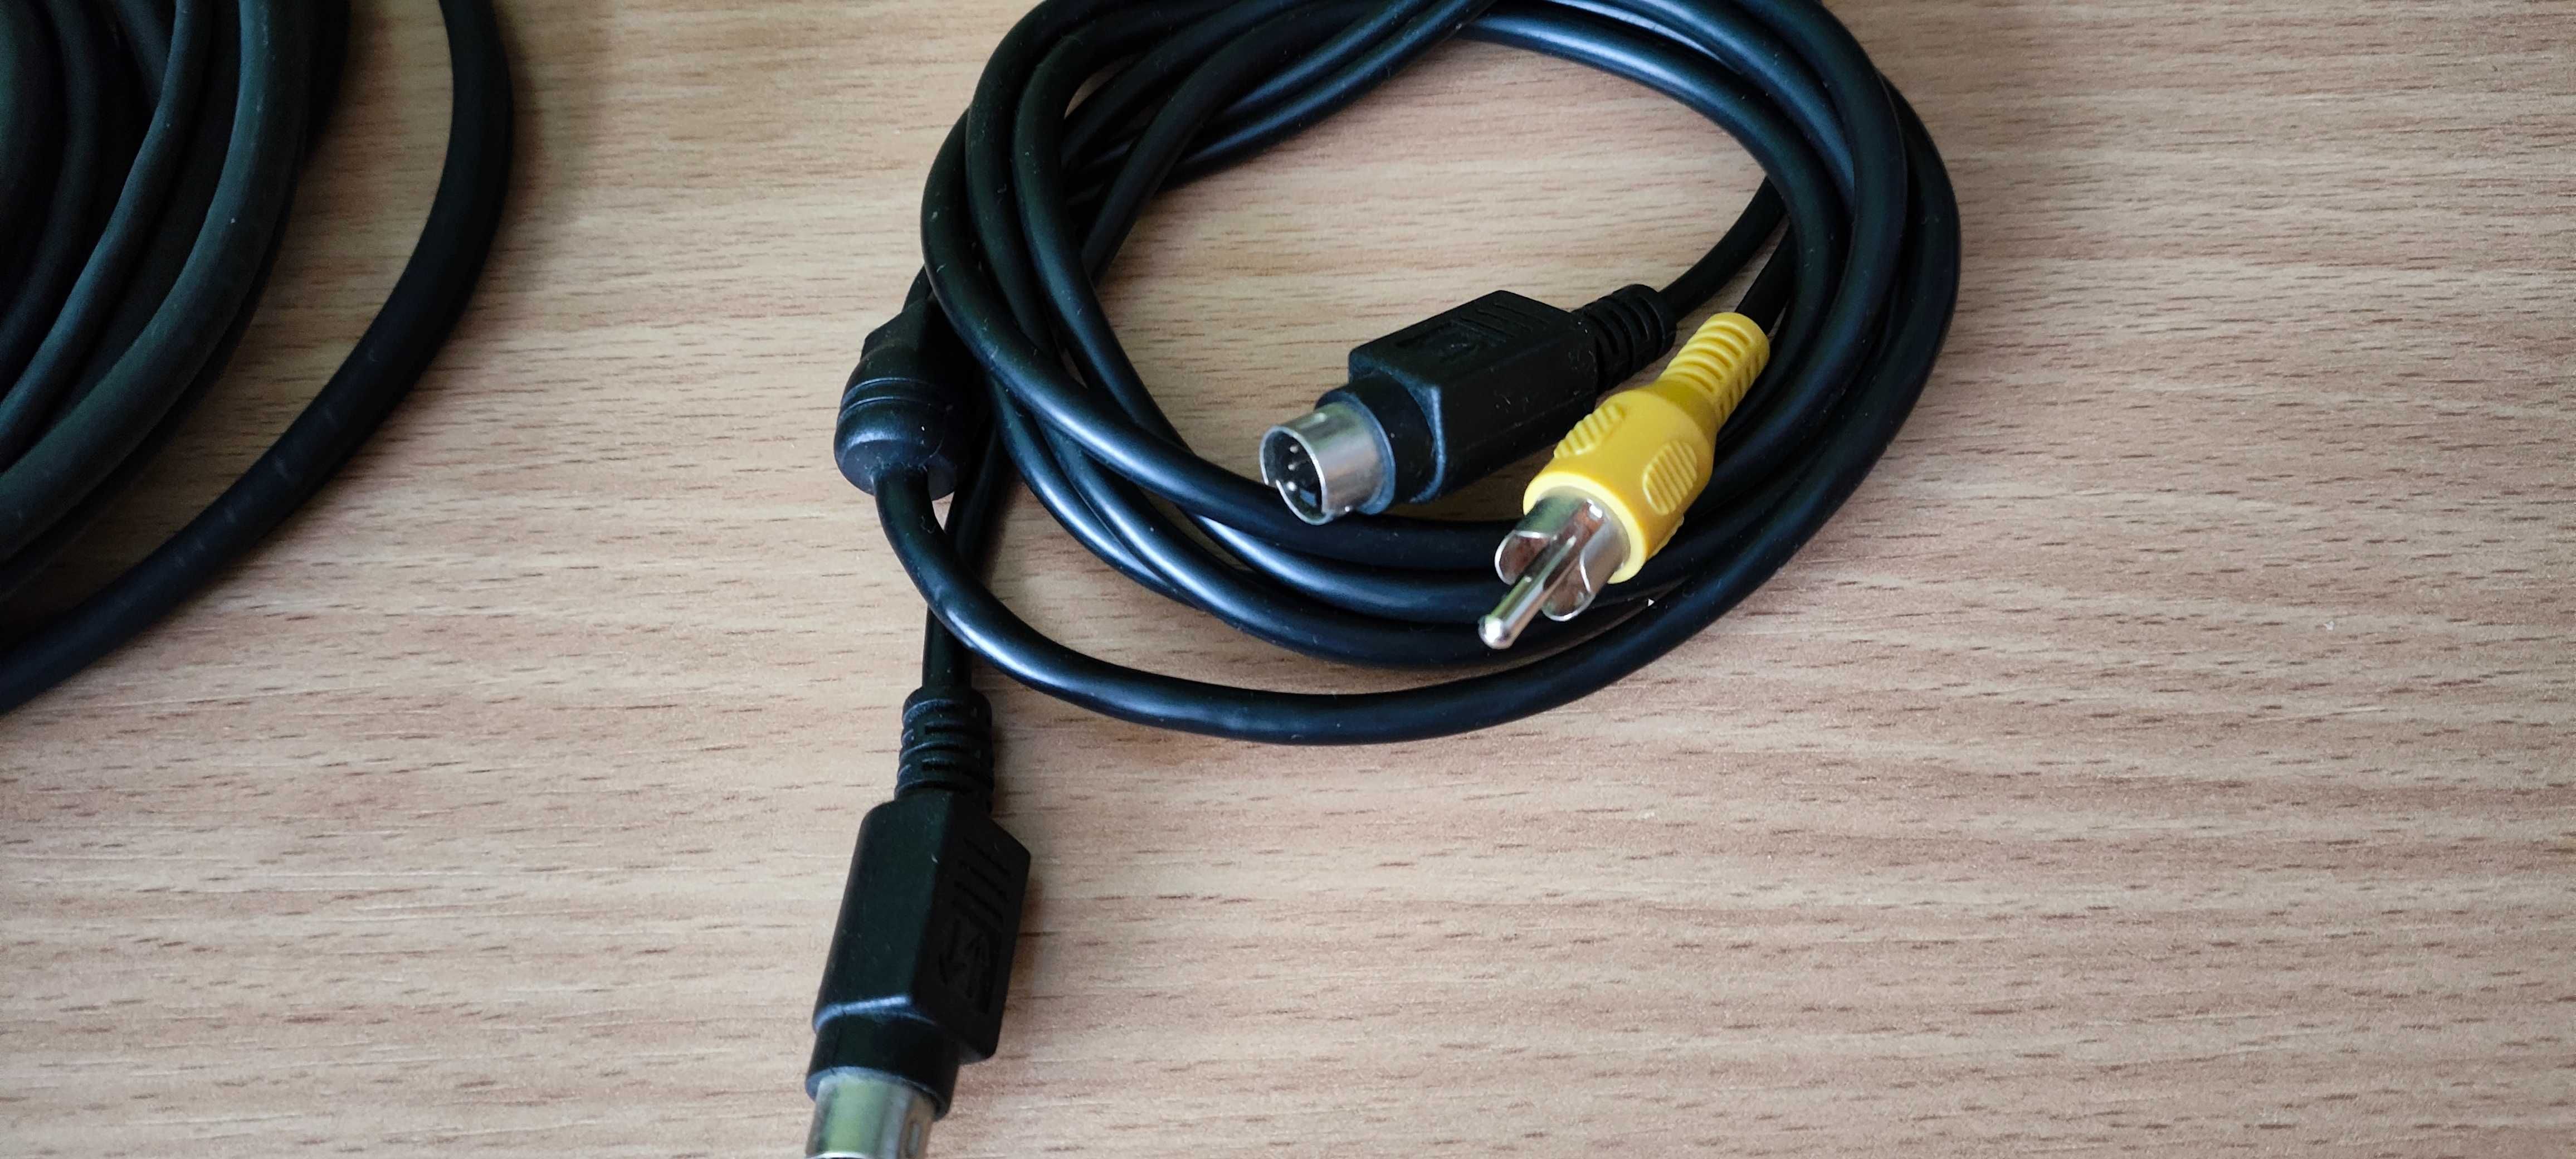 Kabel komputerowy vga / kabel s-video + inne